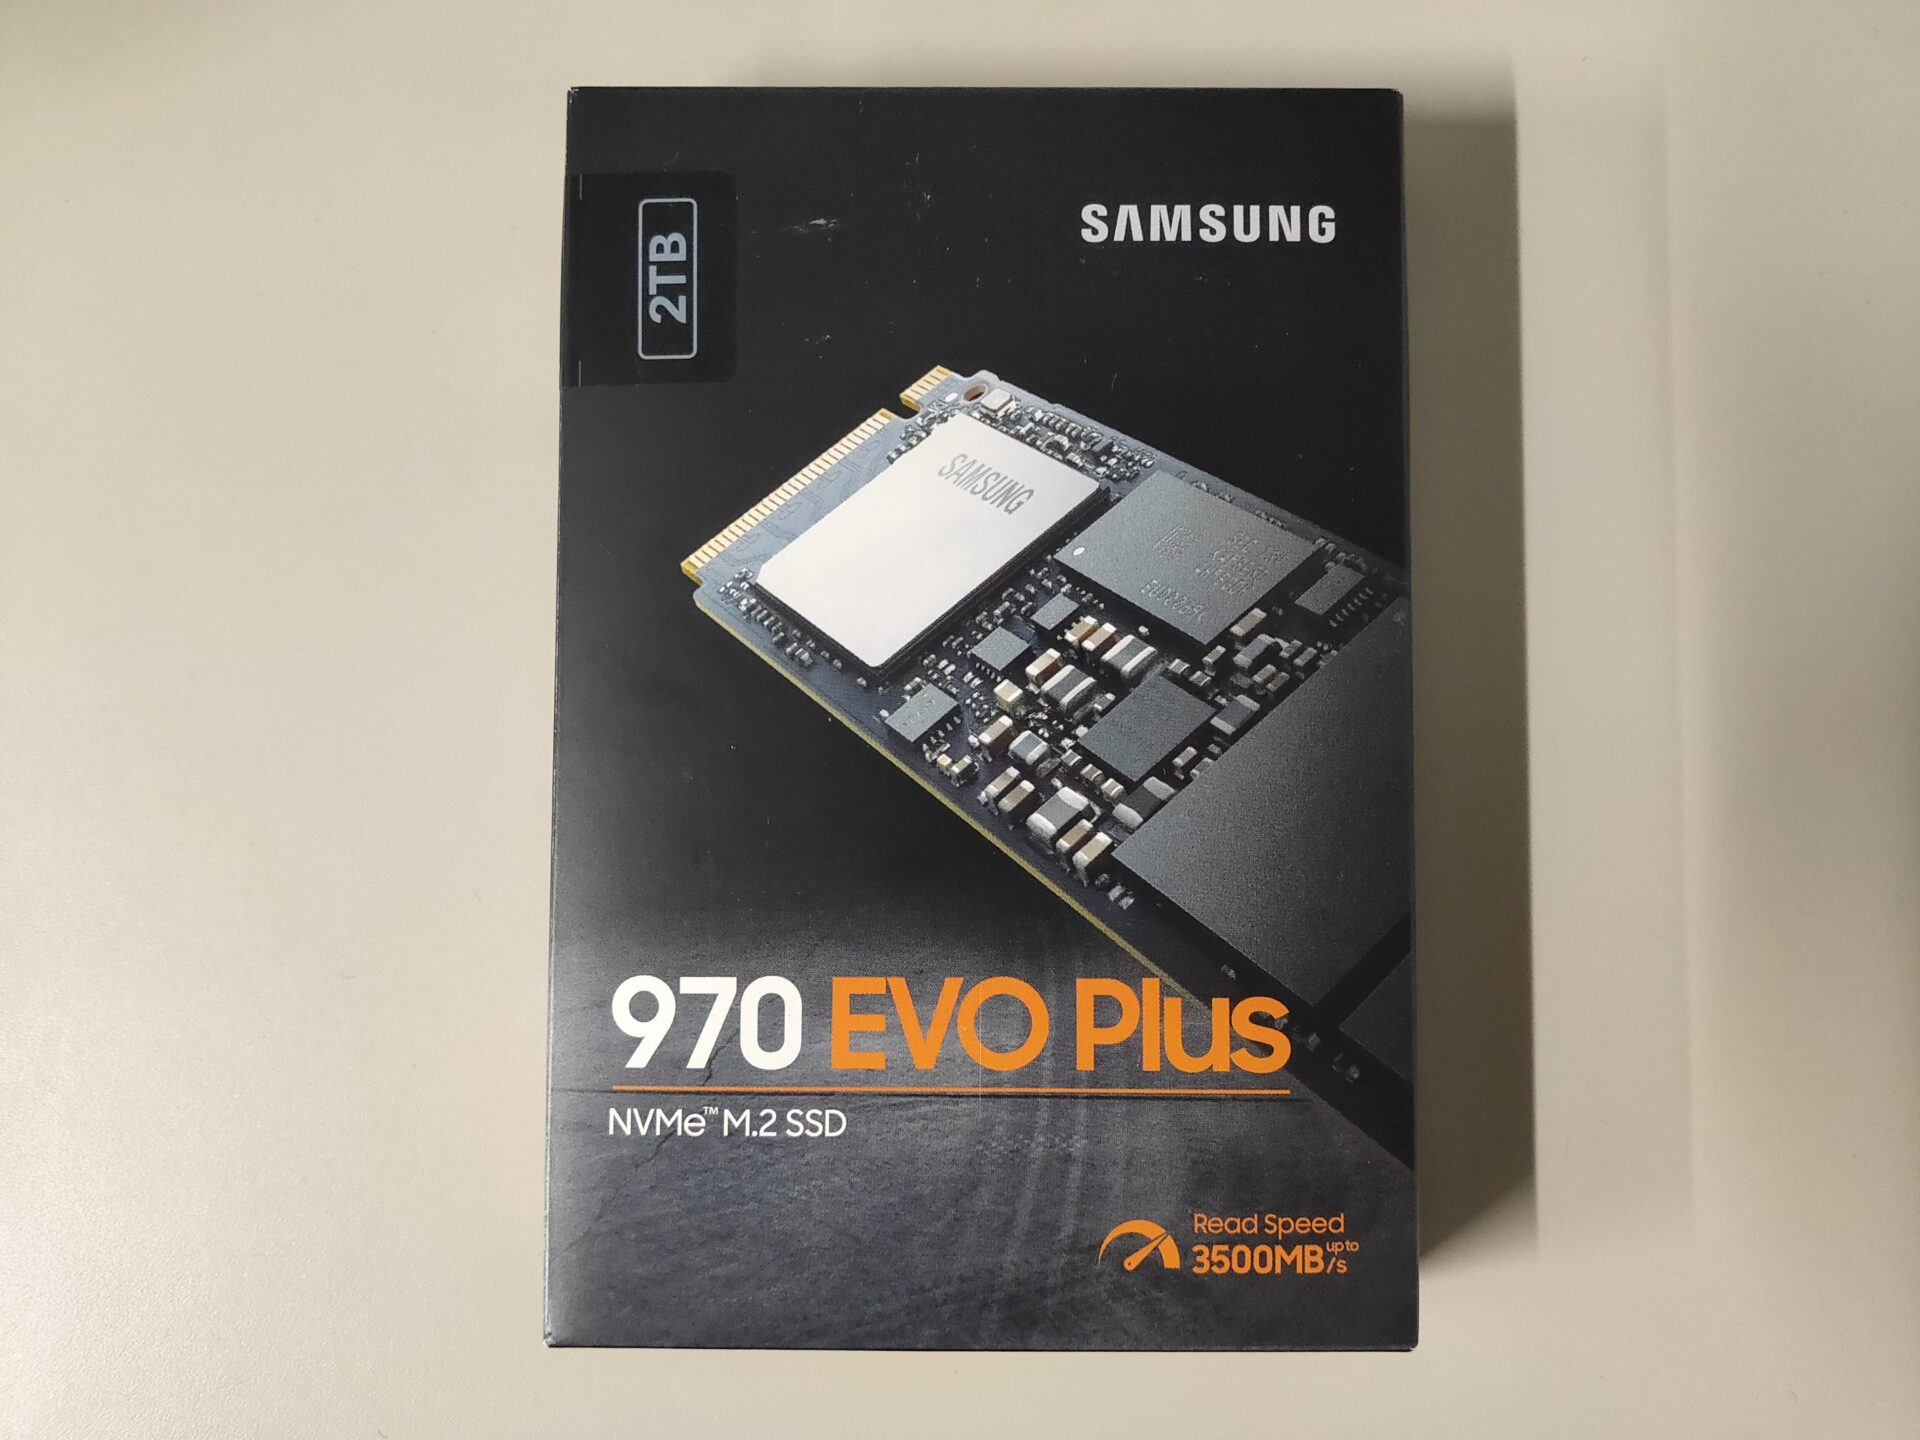 M.2 NVMe SSDであるSamsung 970 EVO Plusの箱の写真